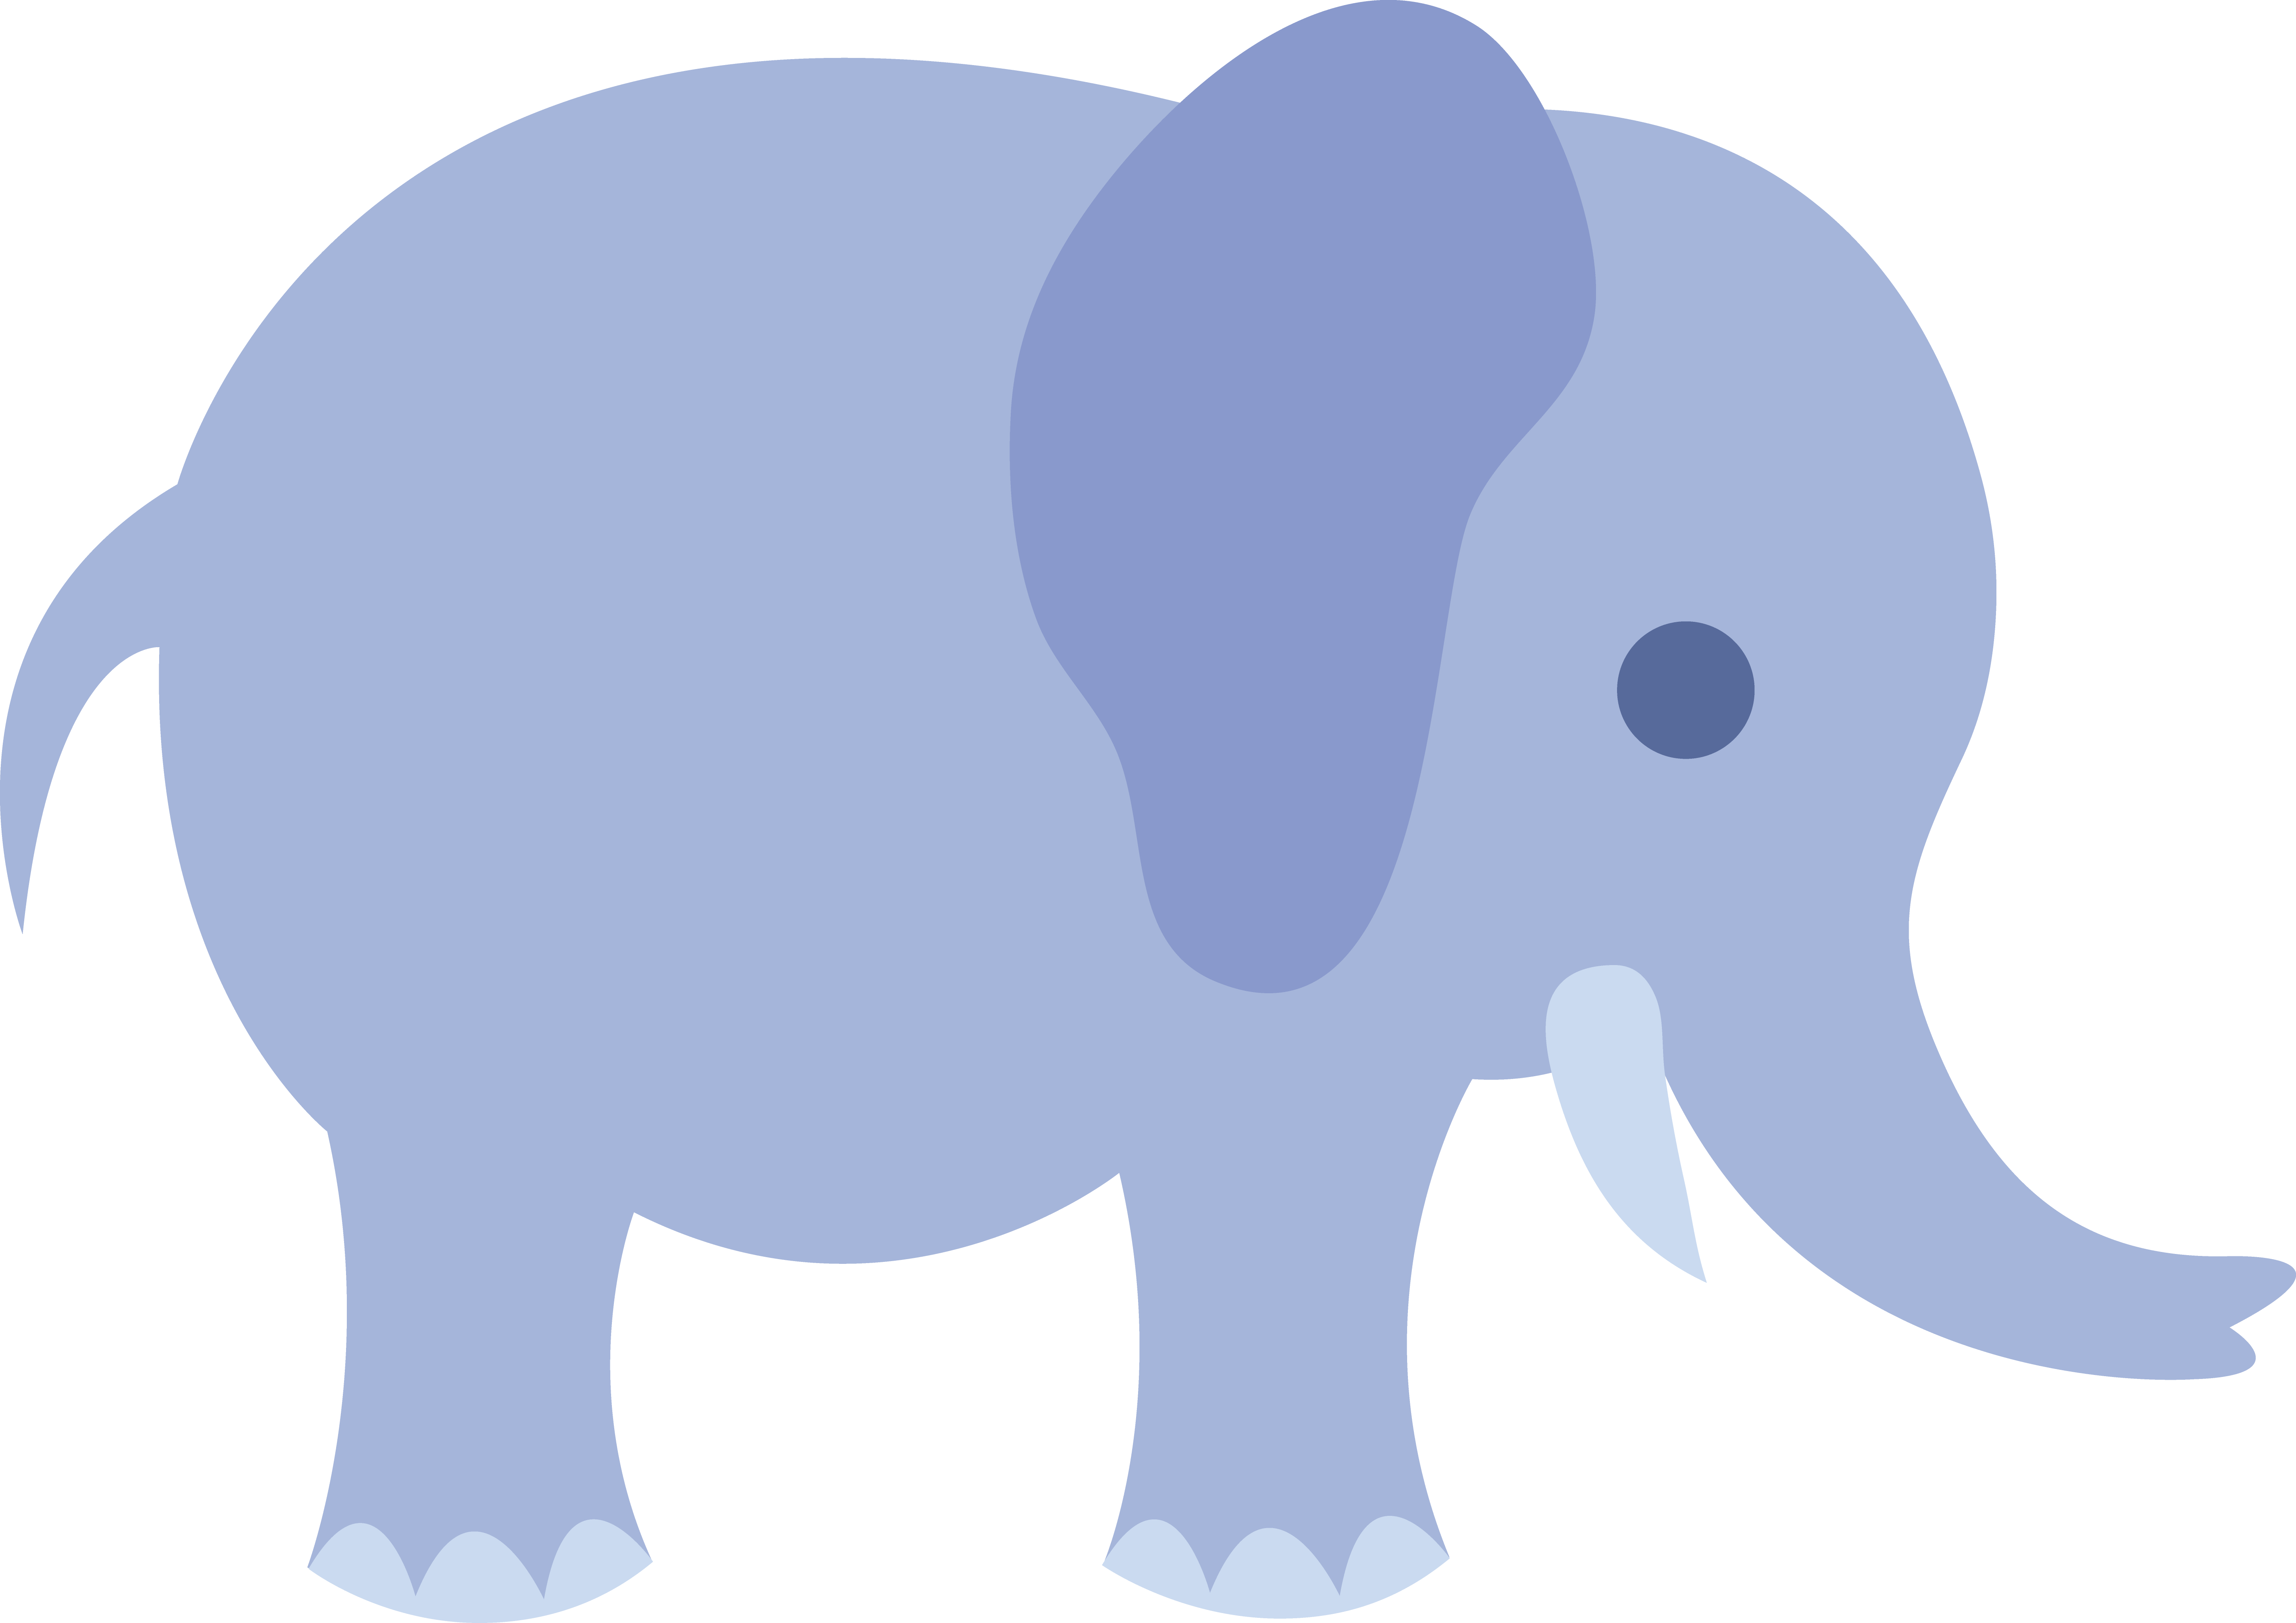 Little Blue Elephant - Indian Elephant (5786x4090)